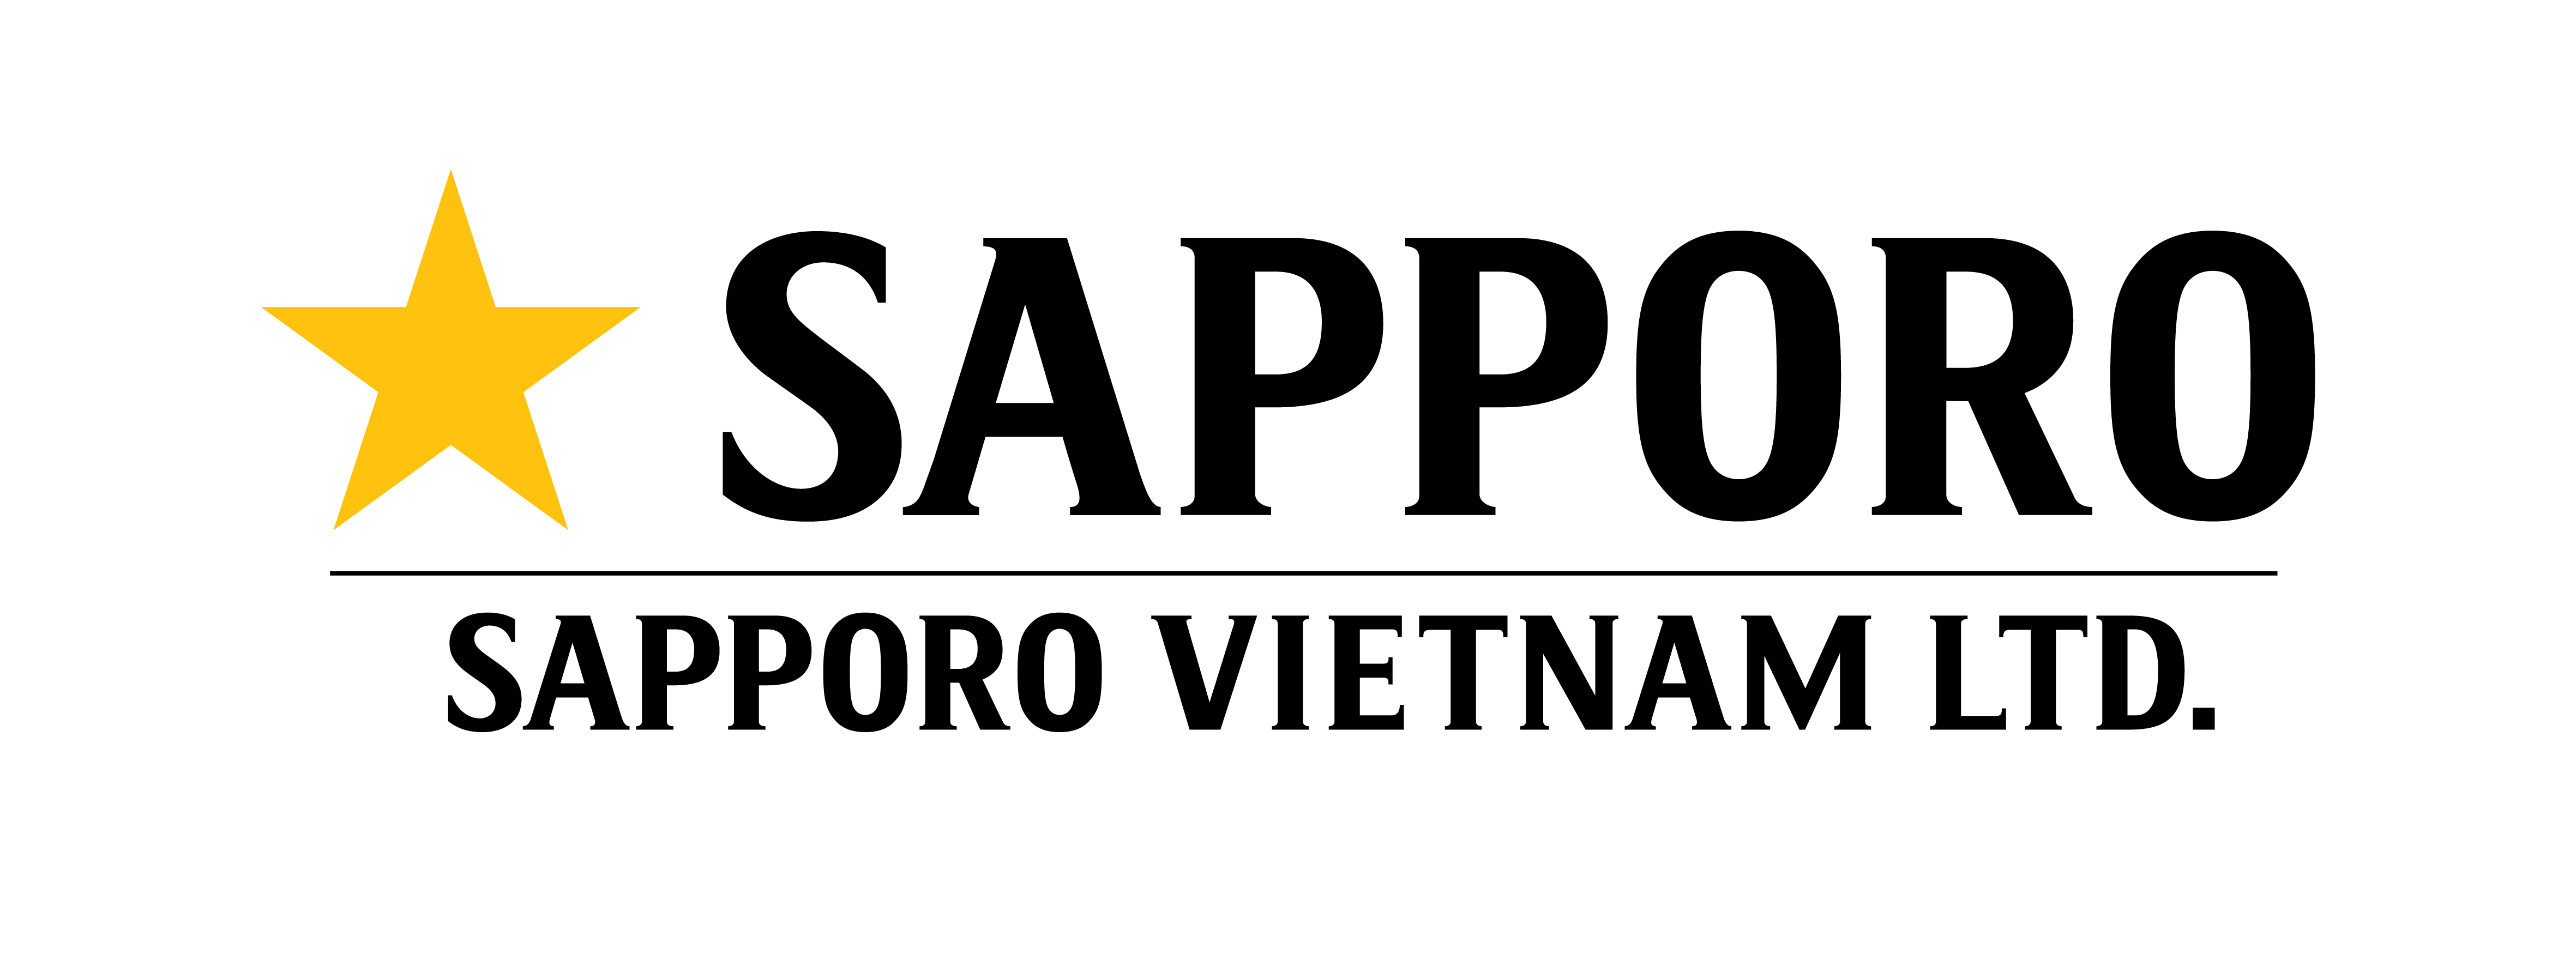 Sapporo Logo - Find Jobs at SAPPORO Vietnam